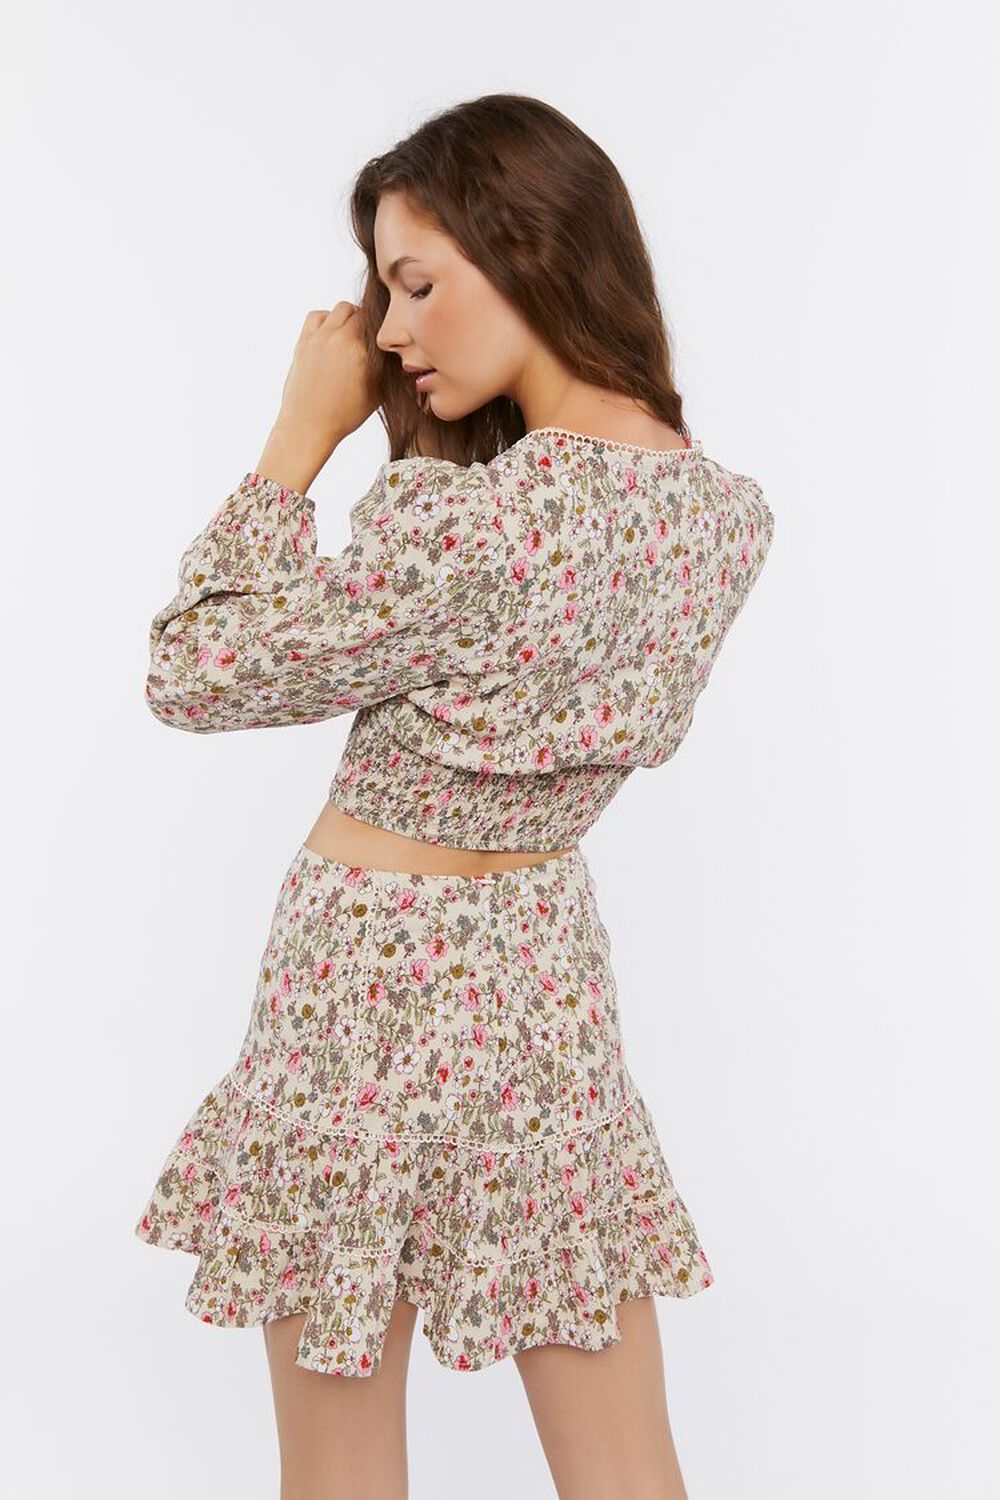 TAN/MULTI Floral Print Crop Top & Mini Skirt Set, image 3